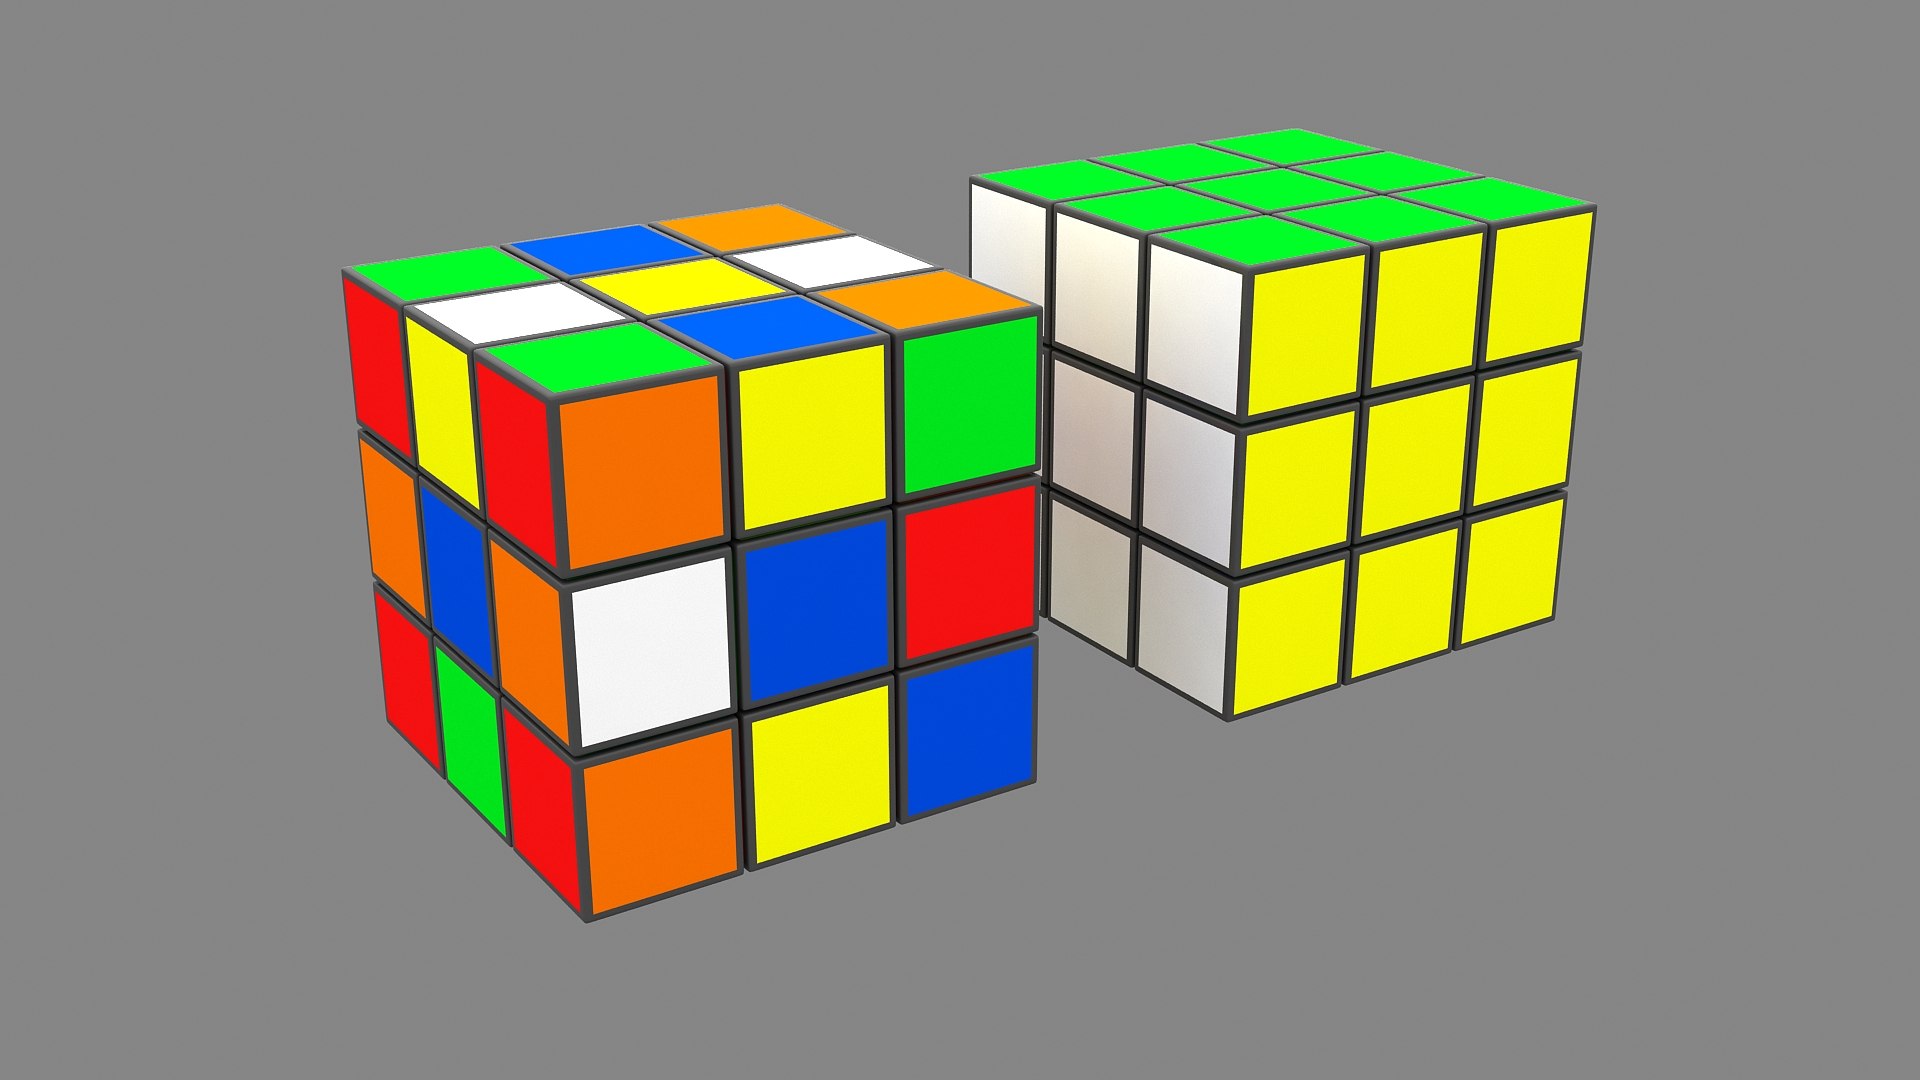 3D Animated Rubiks Cube 6x6 model - TurboSquid 2081471